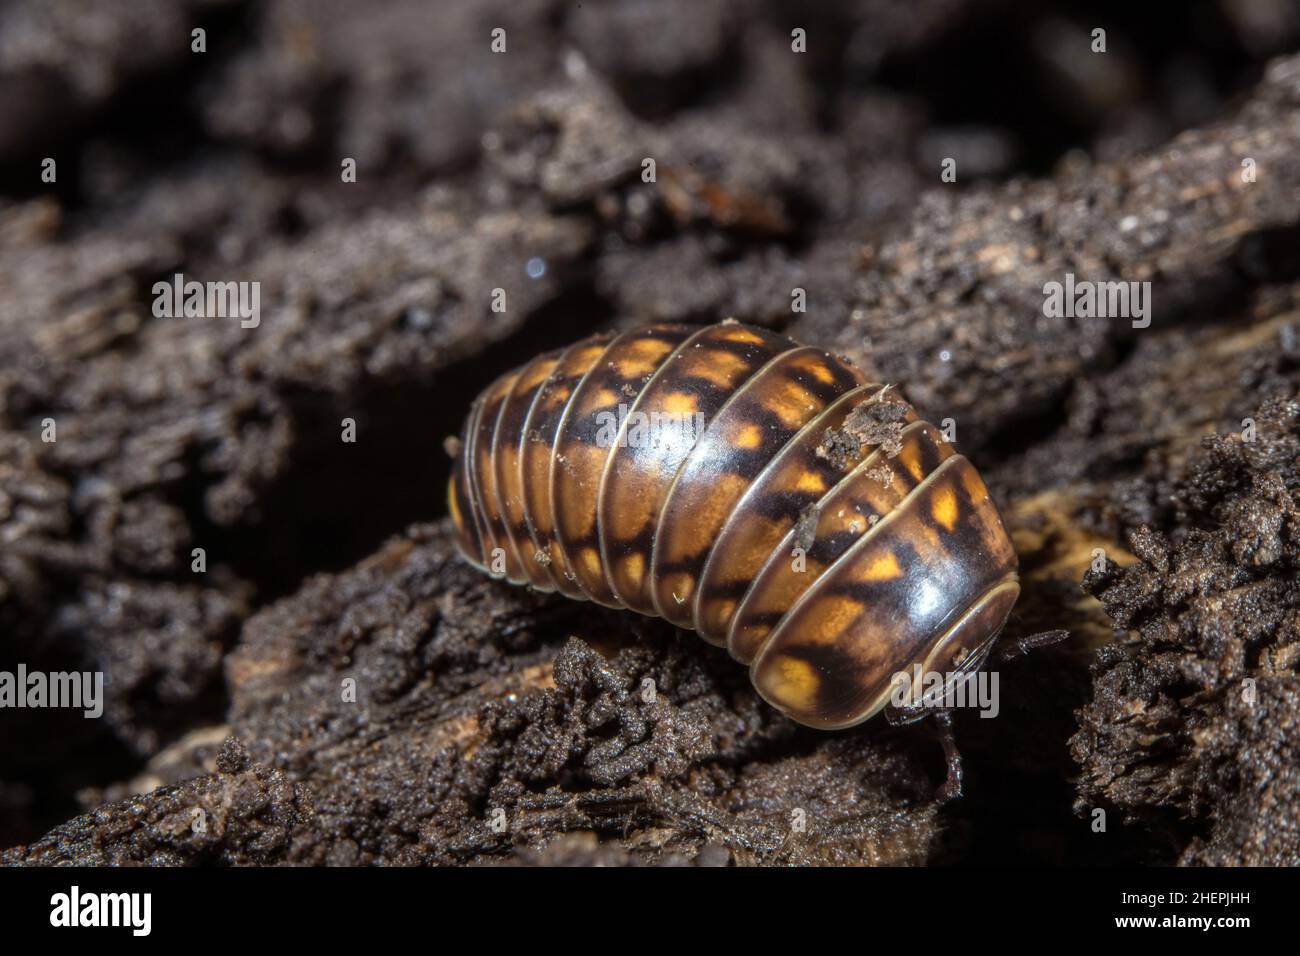 pill millipede (Glomeris hexasticha), on the ground, Germany Stock Photo